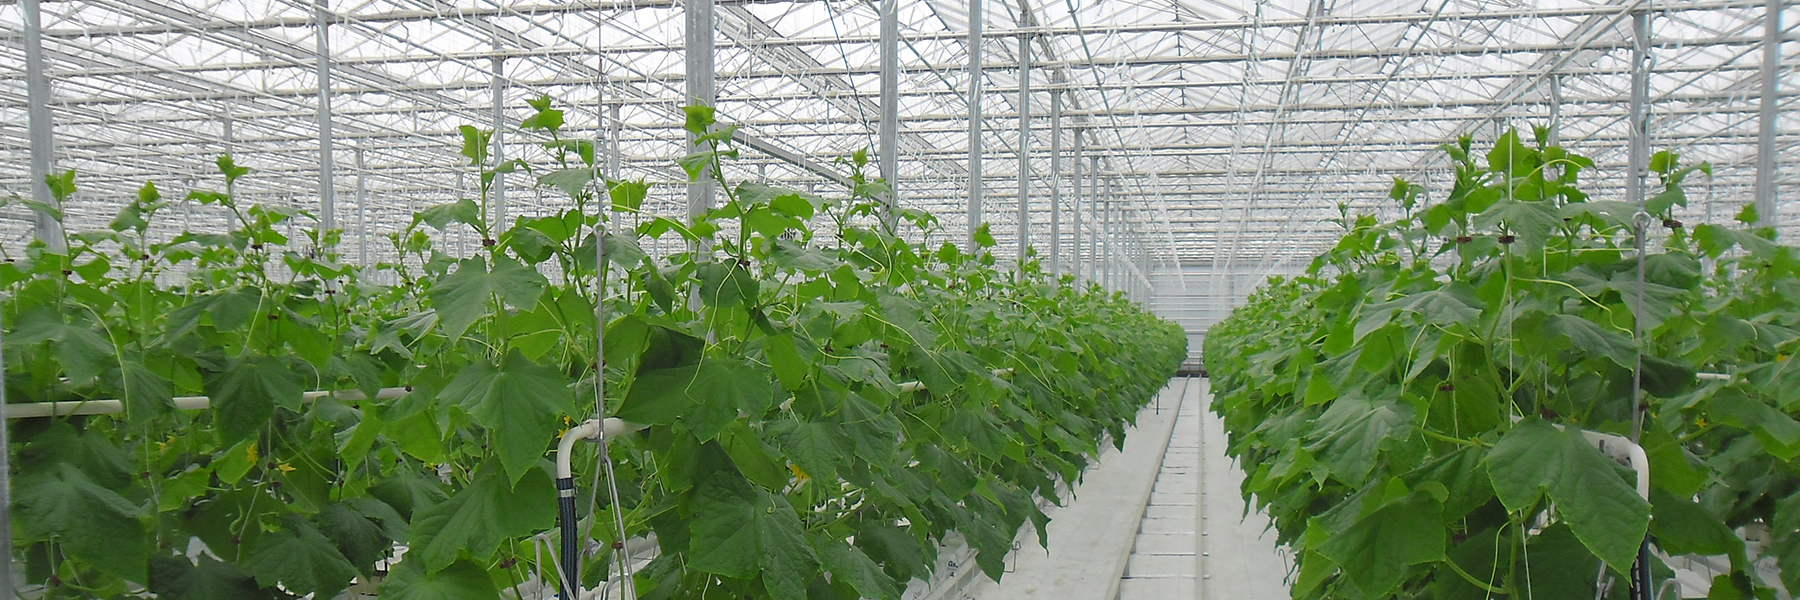 Interior Hydroponics greenhouse